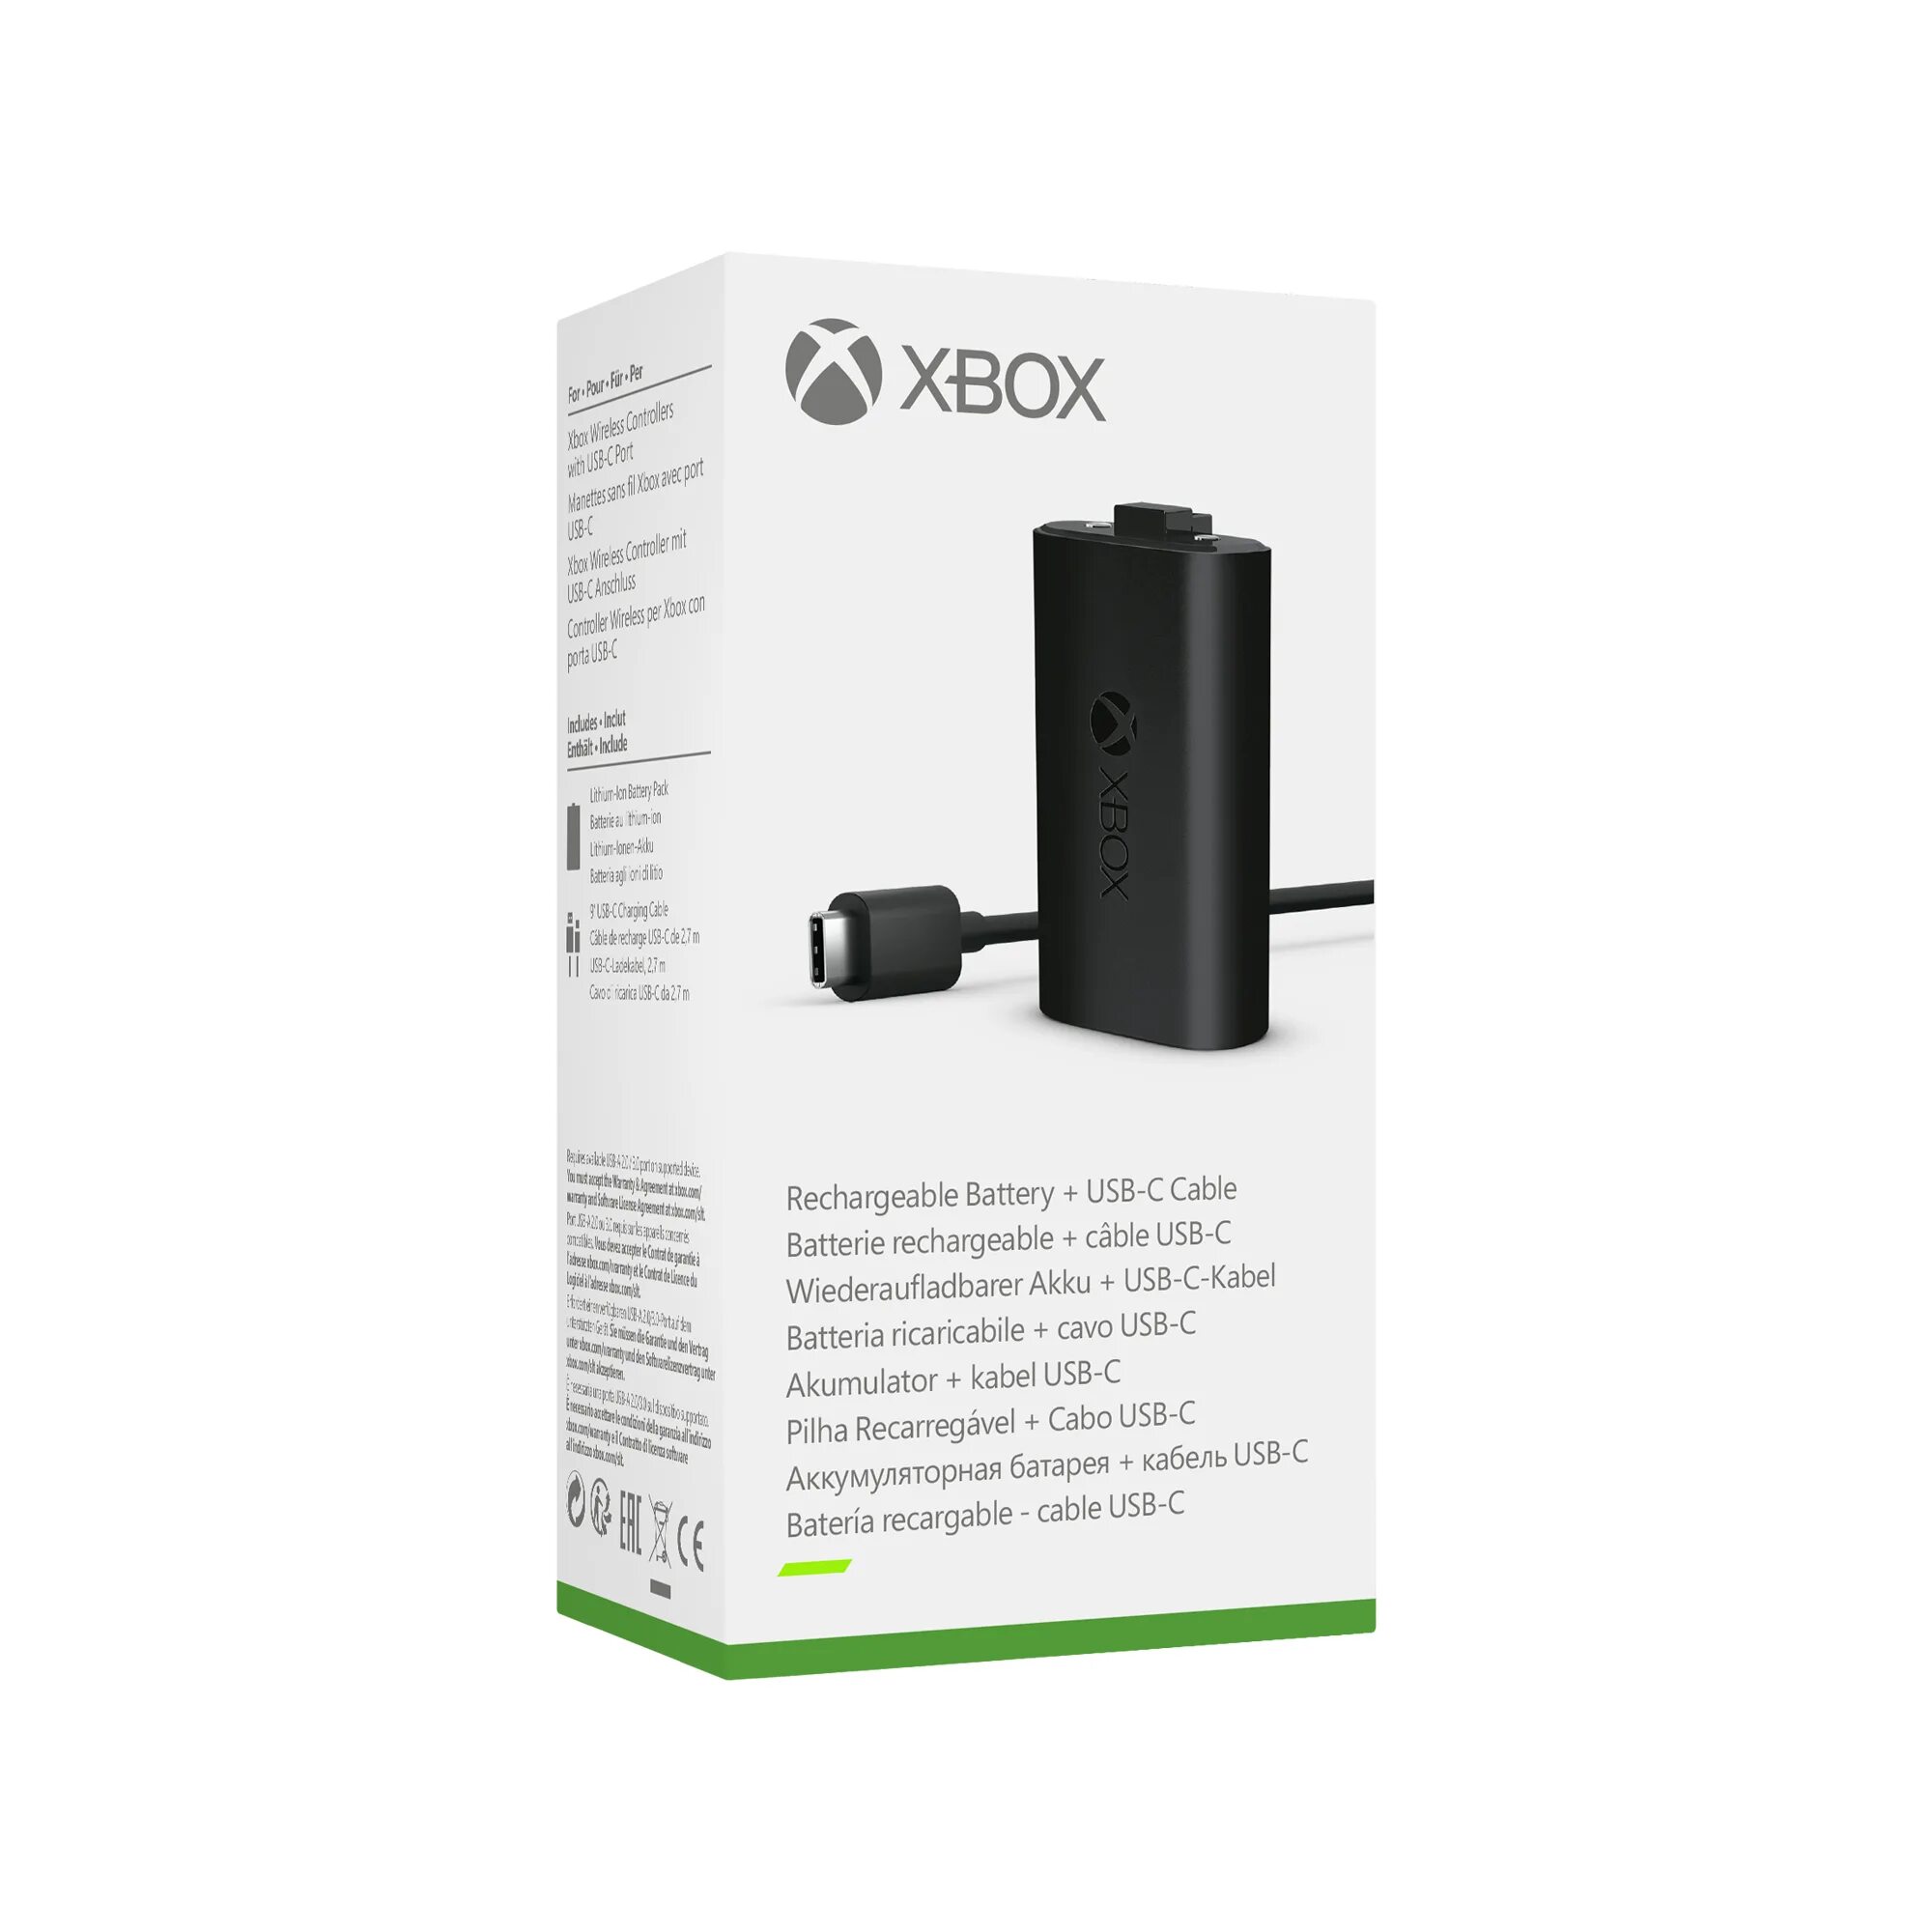 Аккумулятор для xbox series x. Зарядный комплект Microsoft Play and charge Kit для Xbox one. Геймпад Xbox Series s аккумулятор. Аккумулятор с зарядкой для геймпада Xbox one. Аккумуляторная батарея Xbox и кабель USB-C.